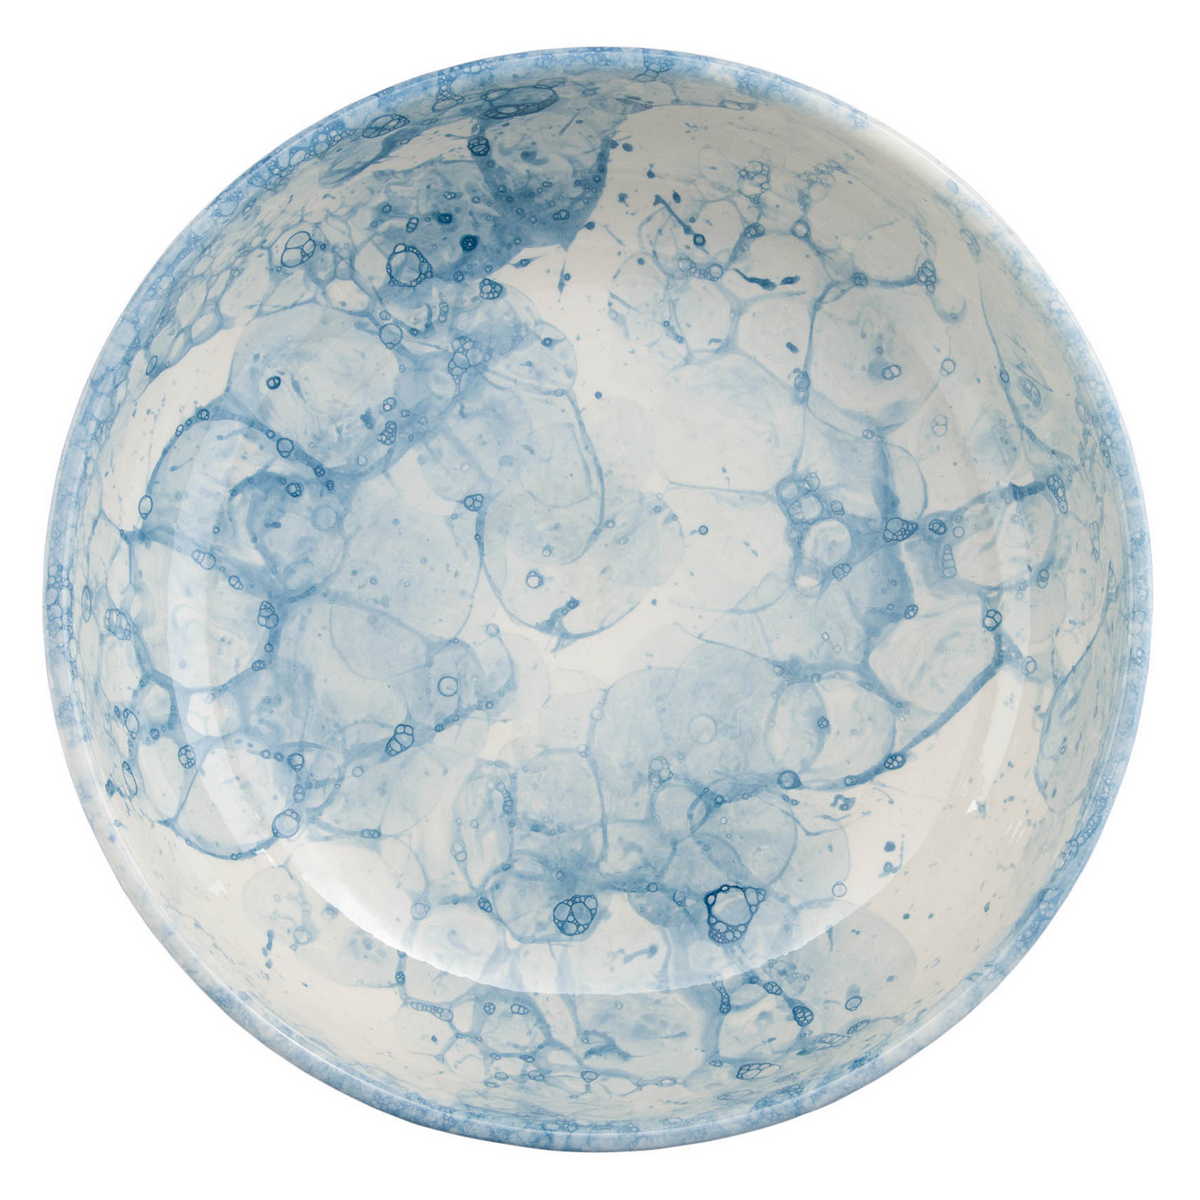 Bowls & Dishes Espuma schaal 31cm - midnight blue